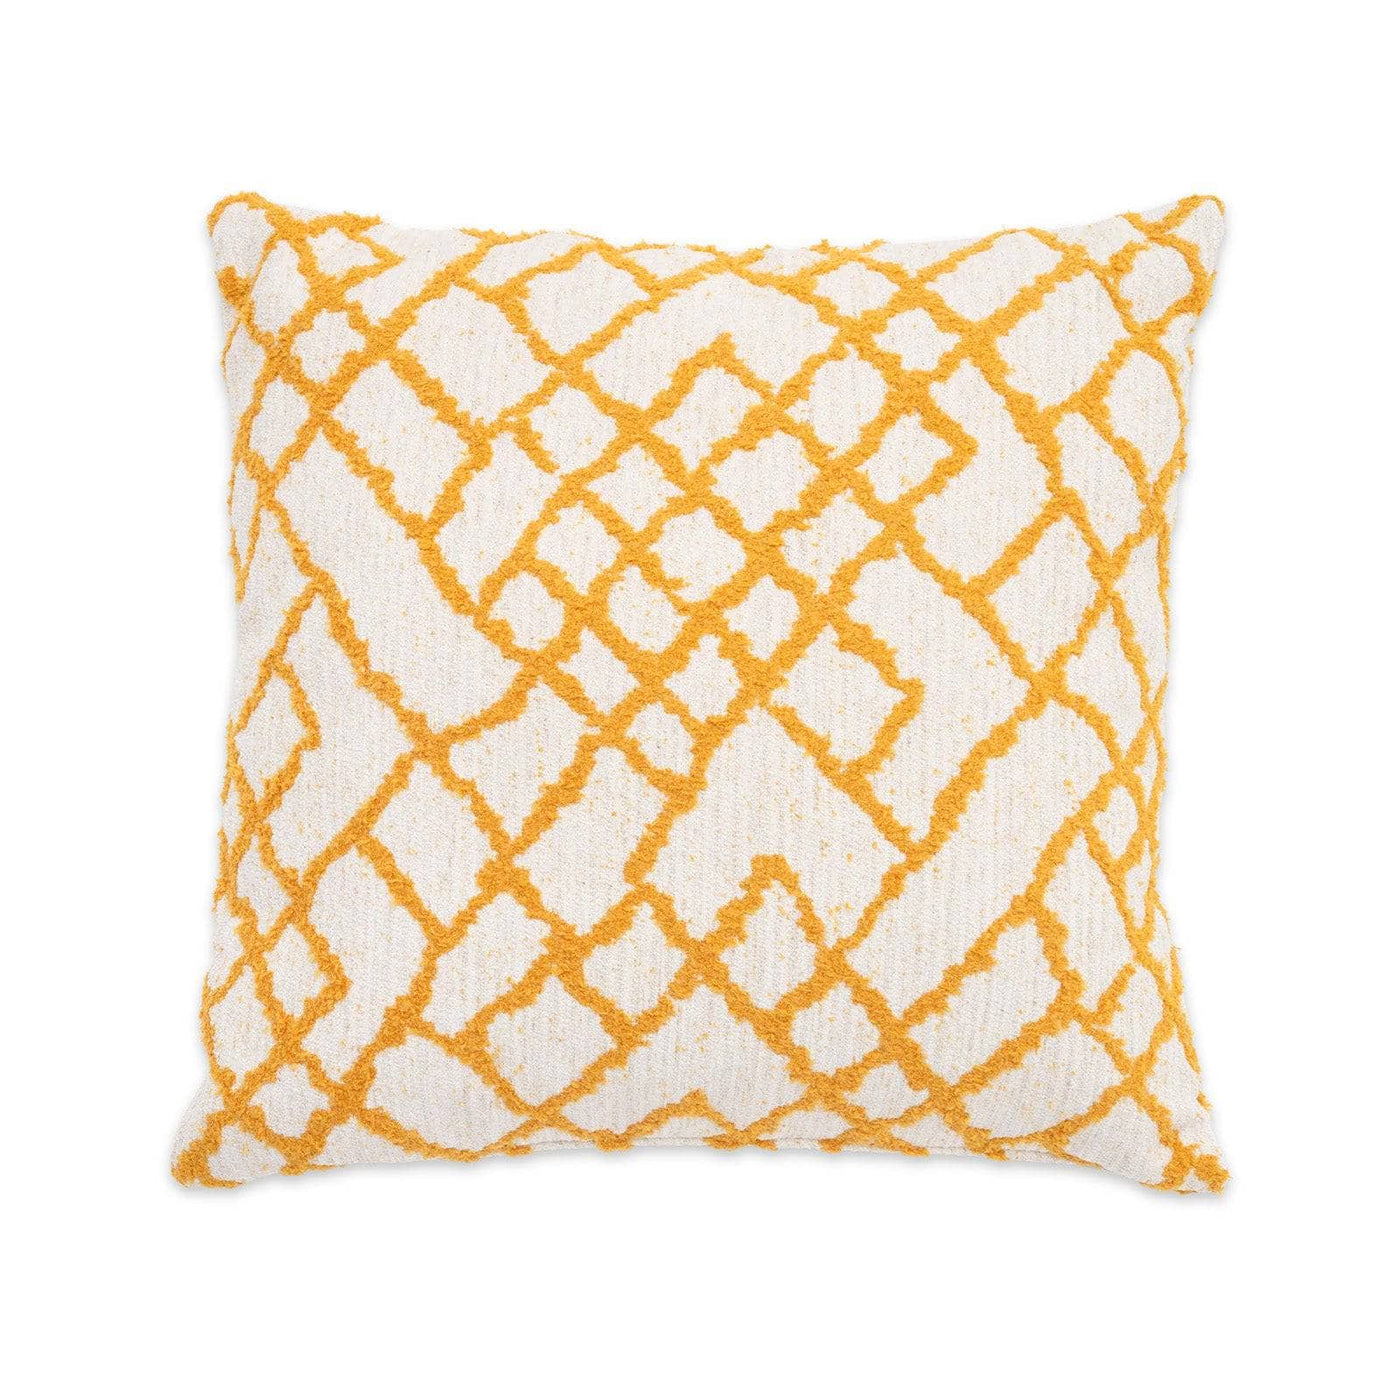 Diamond Geometric Cushion Cover, Yellow, 50x50 cm Cushion Covers sazy.com